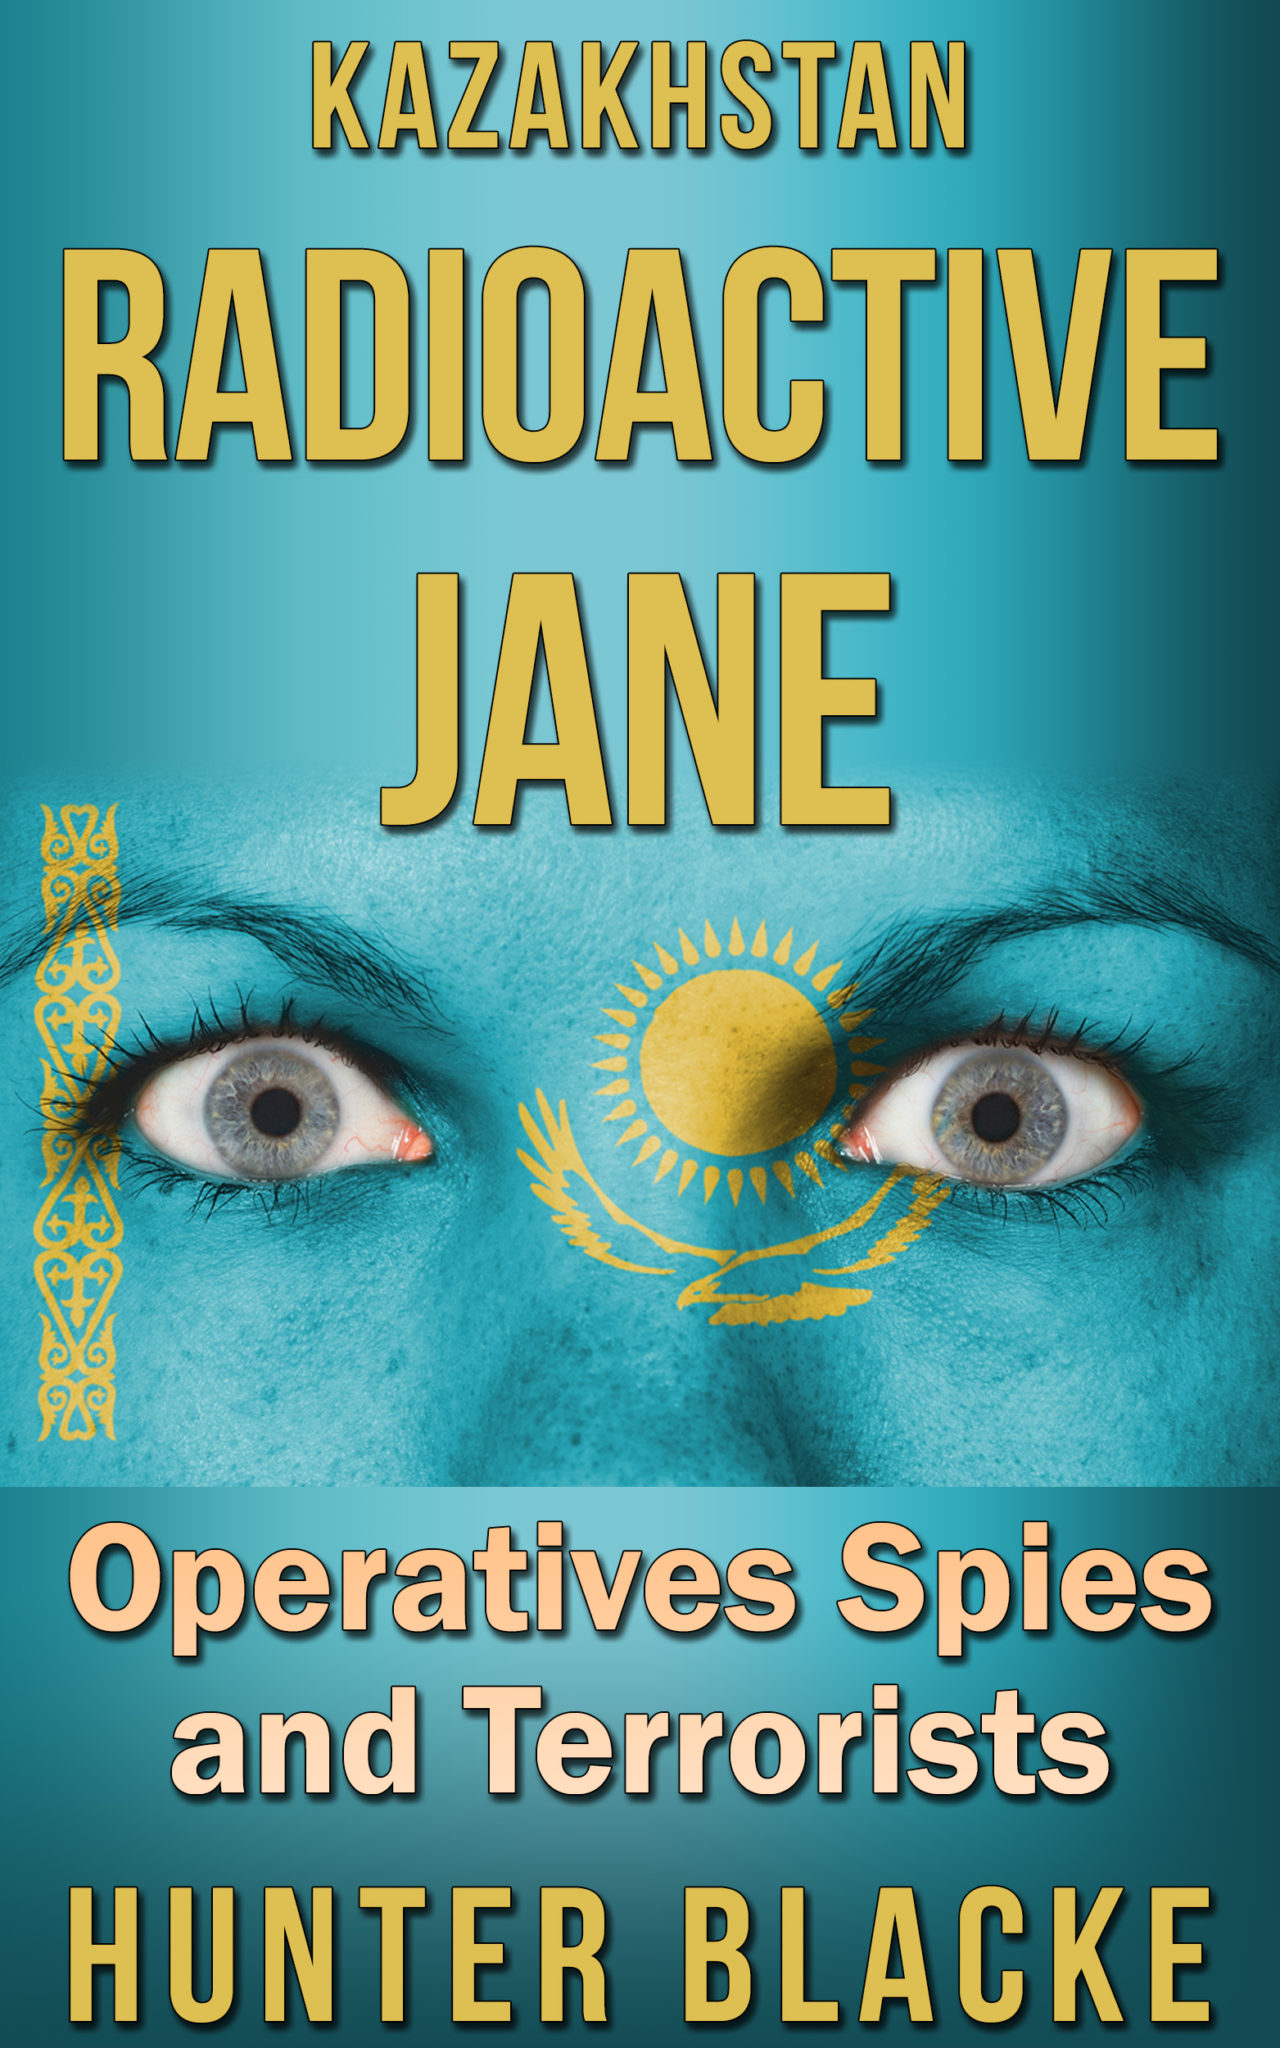 Kazakhstan ‘Radioactive Jane’ by Hunter Blacke